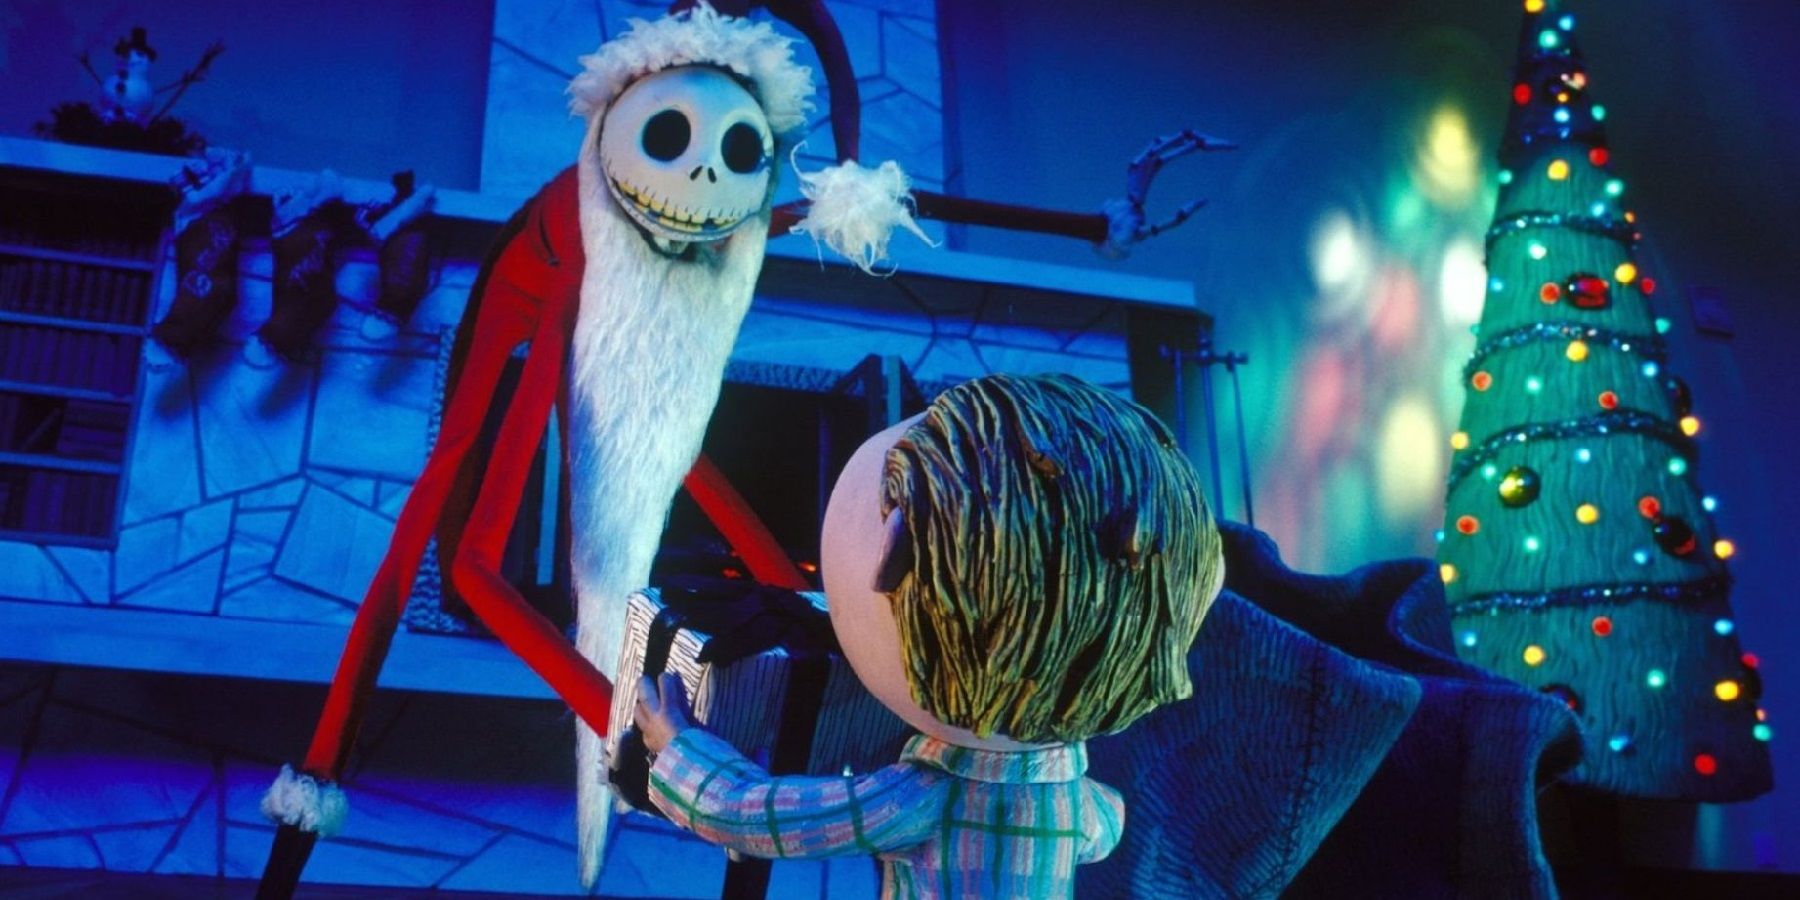 The Nightmare Before Christmas - Jack taking a Christmas tree dressed as Santa